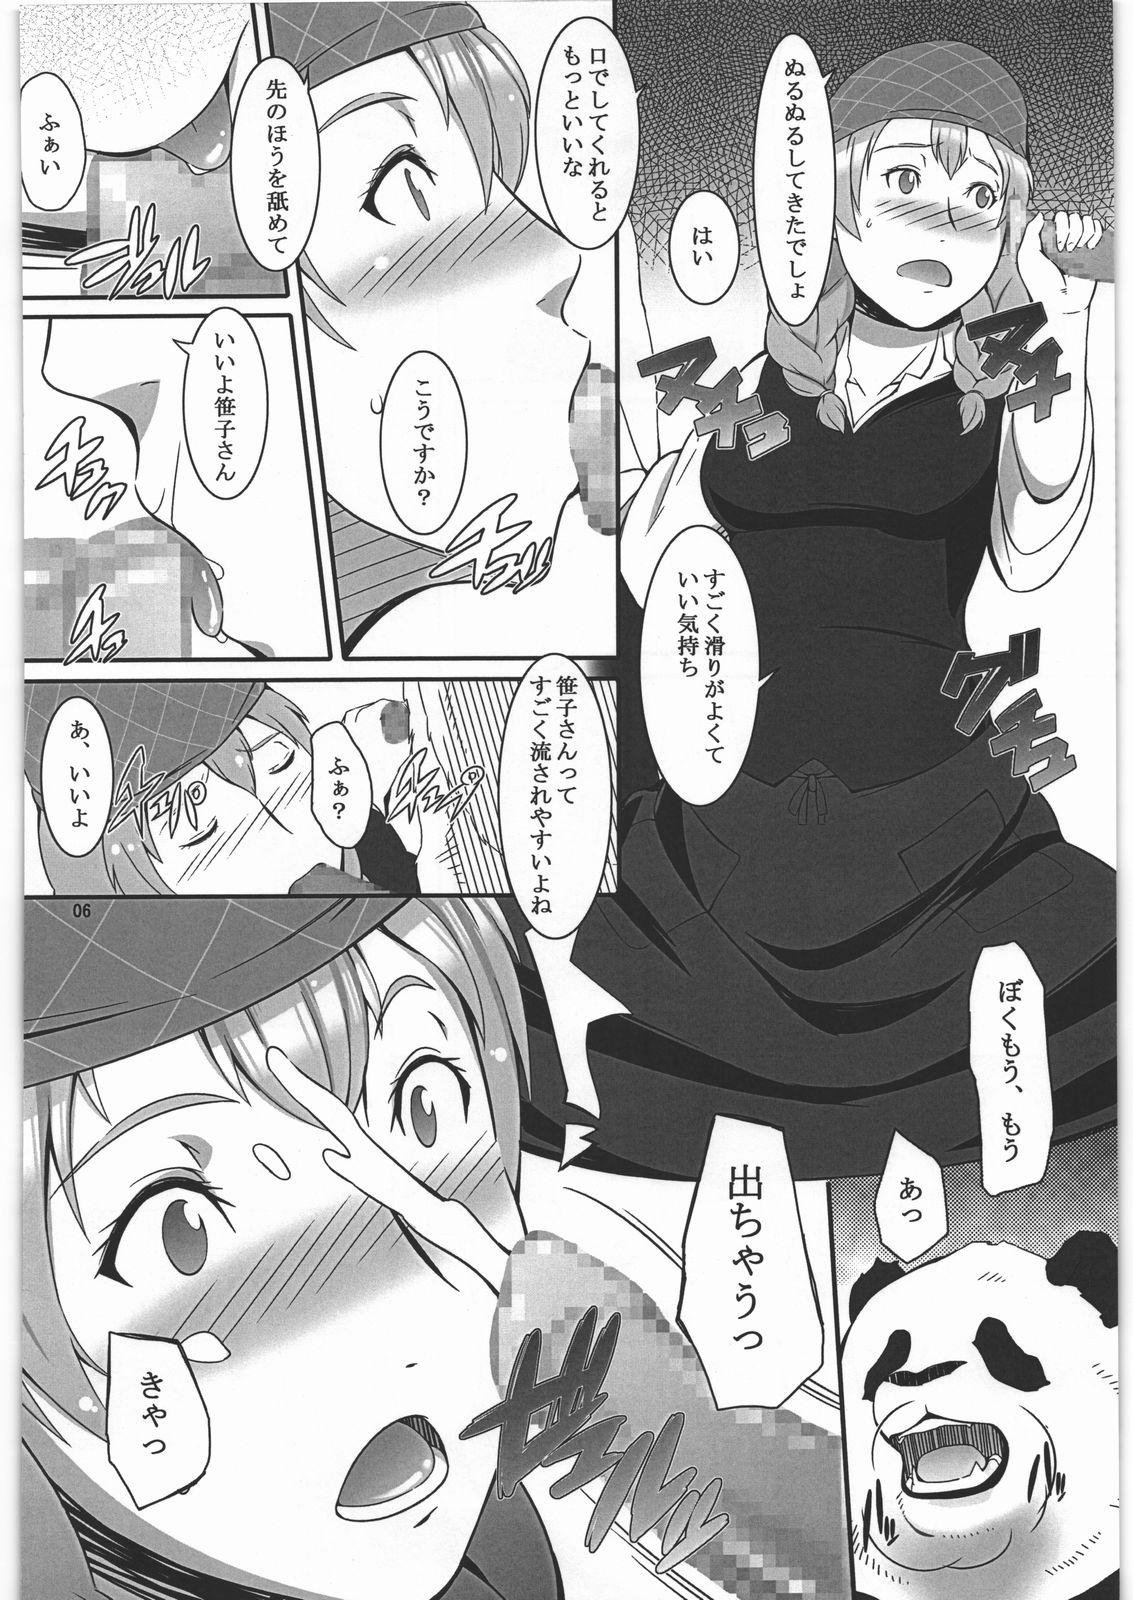 Zorra A, Milk Oome de Onegaishimasu - Shirokuma cafe Black Girl - Page 5